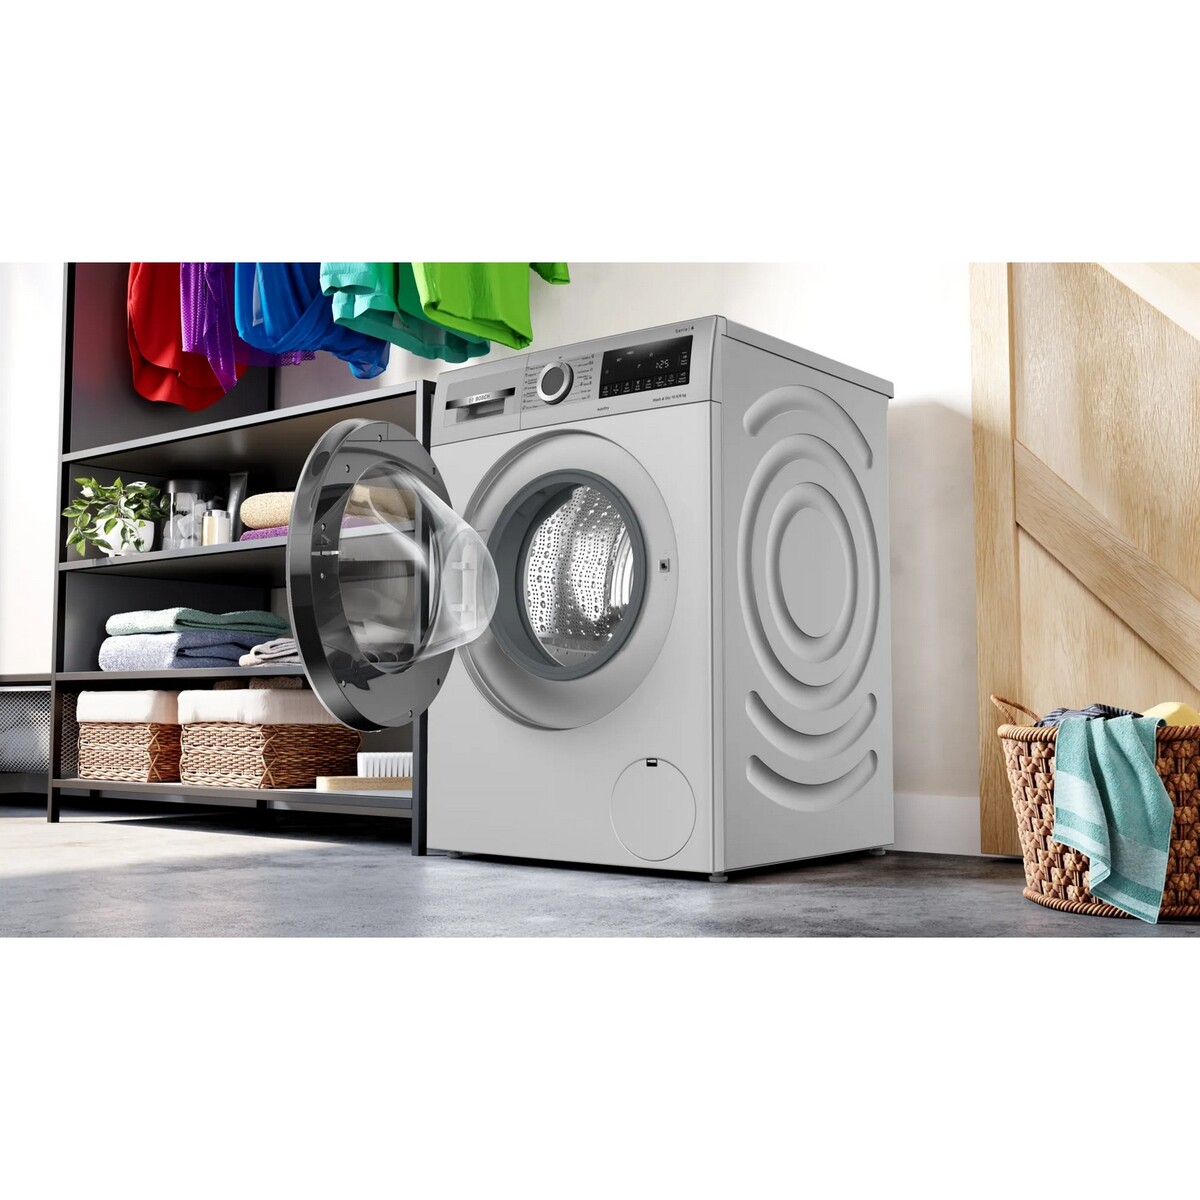 Bosch Frond Load Wash Dryer WNA264U9IN 10.5Kg/6 Kg